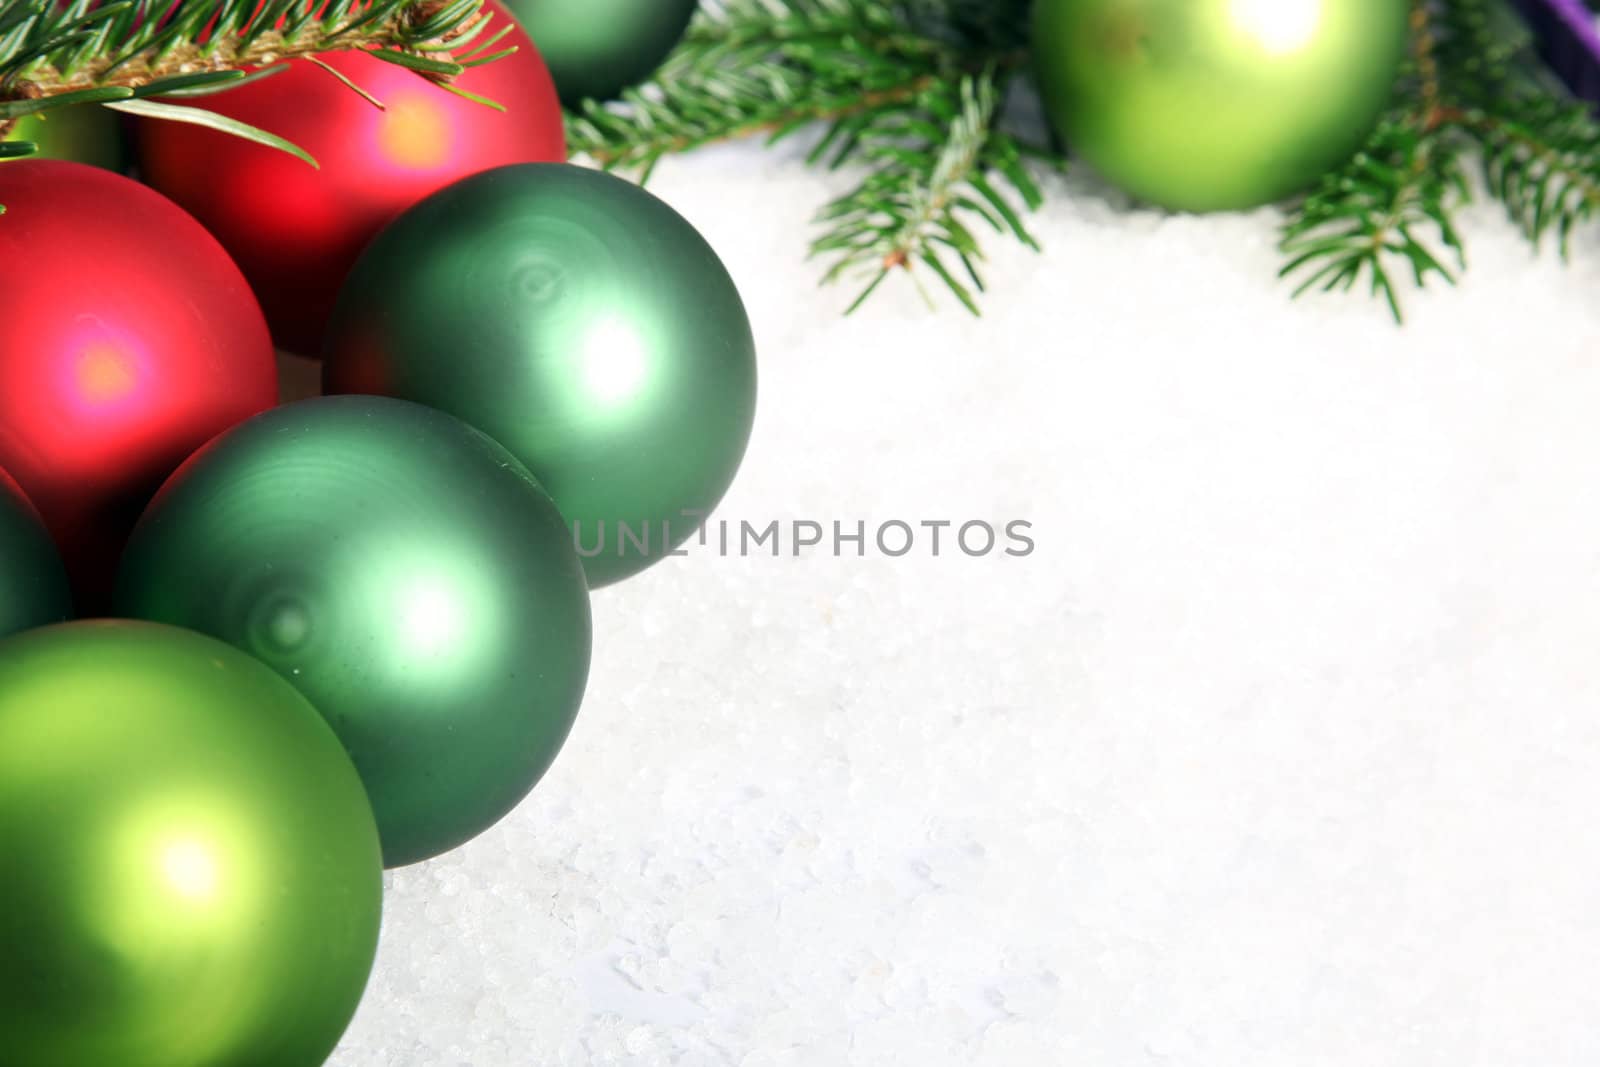 Several Christmas ornaments by Farina6000